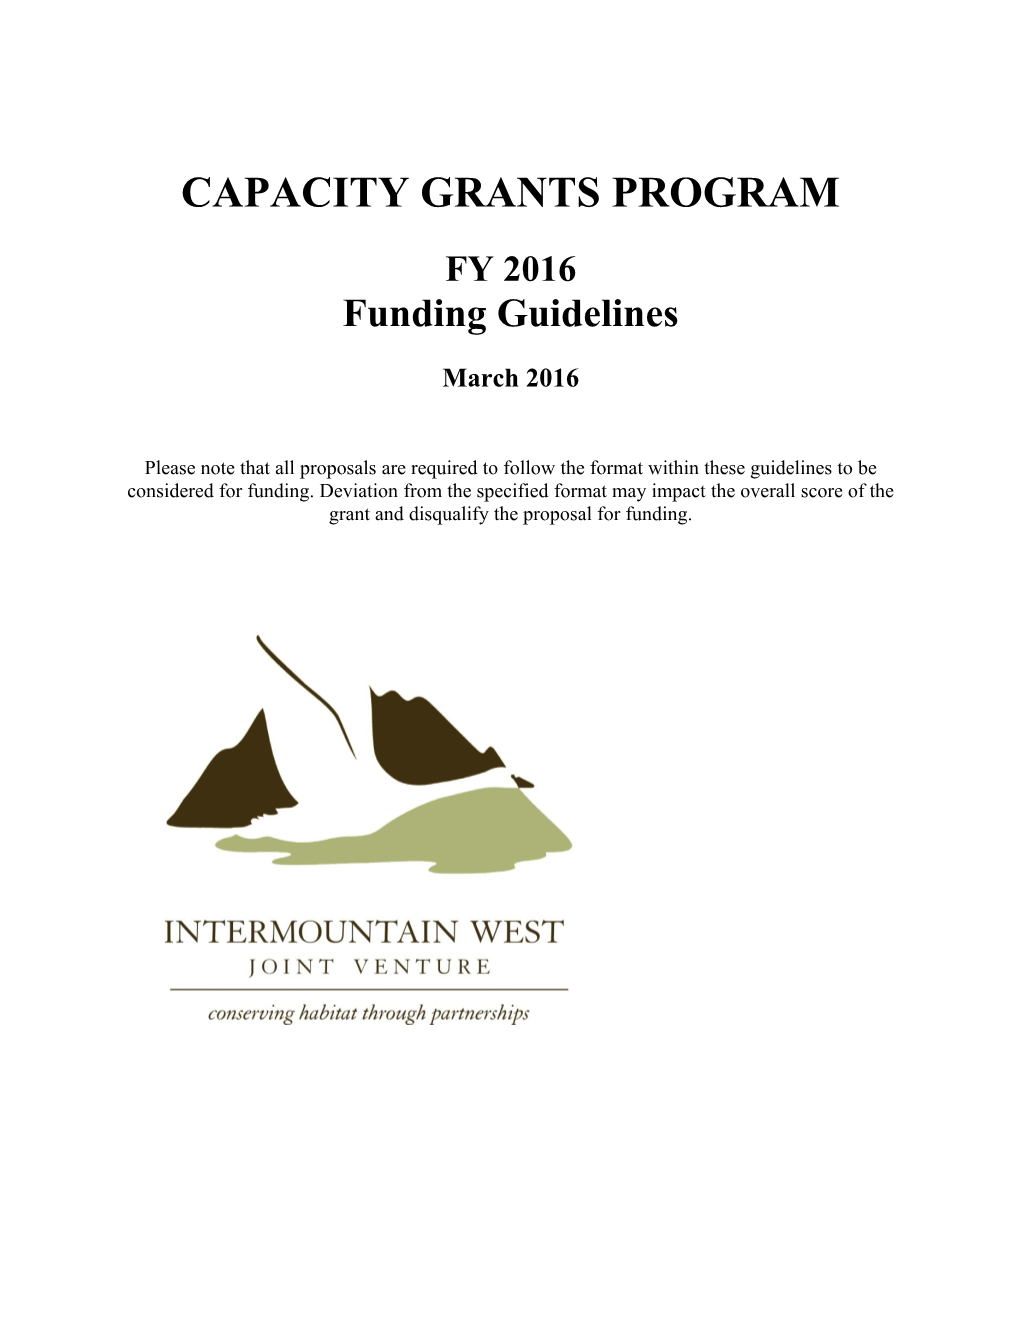 IWJV Capacity Grants Program Funding Guidelines